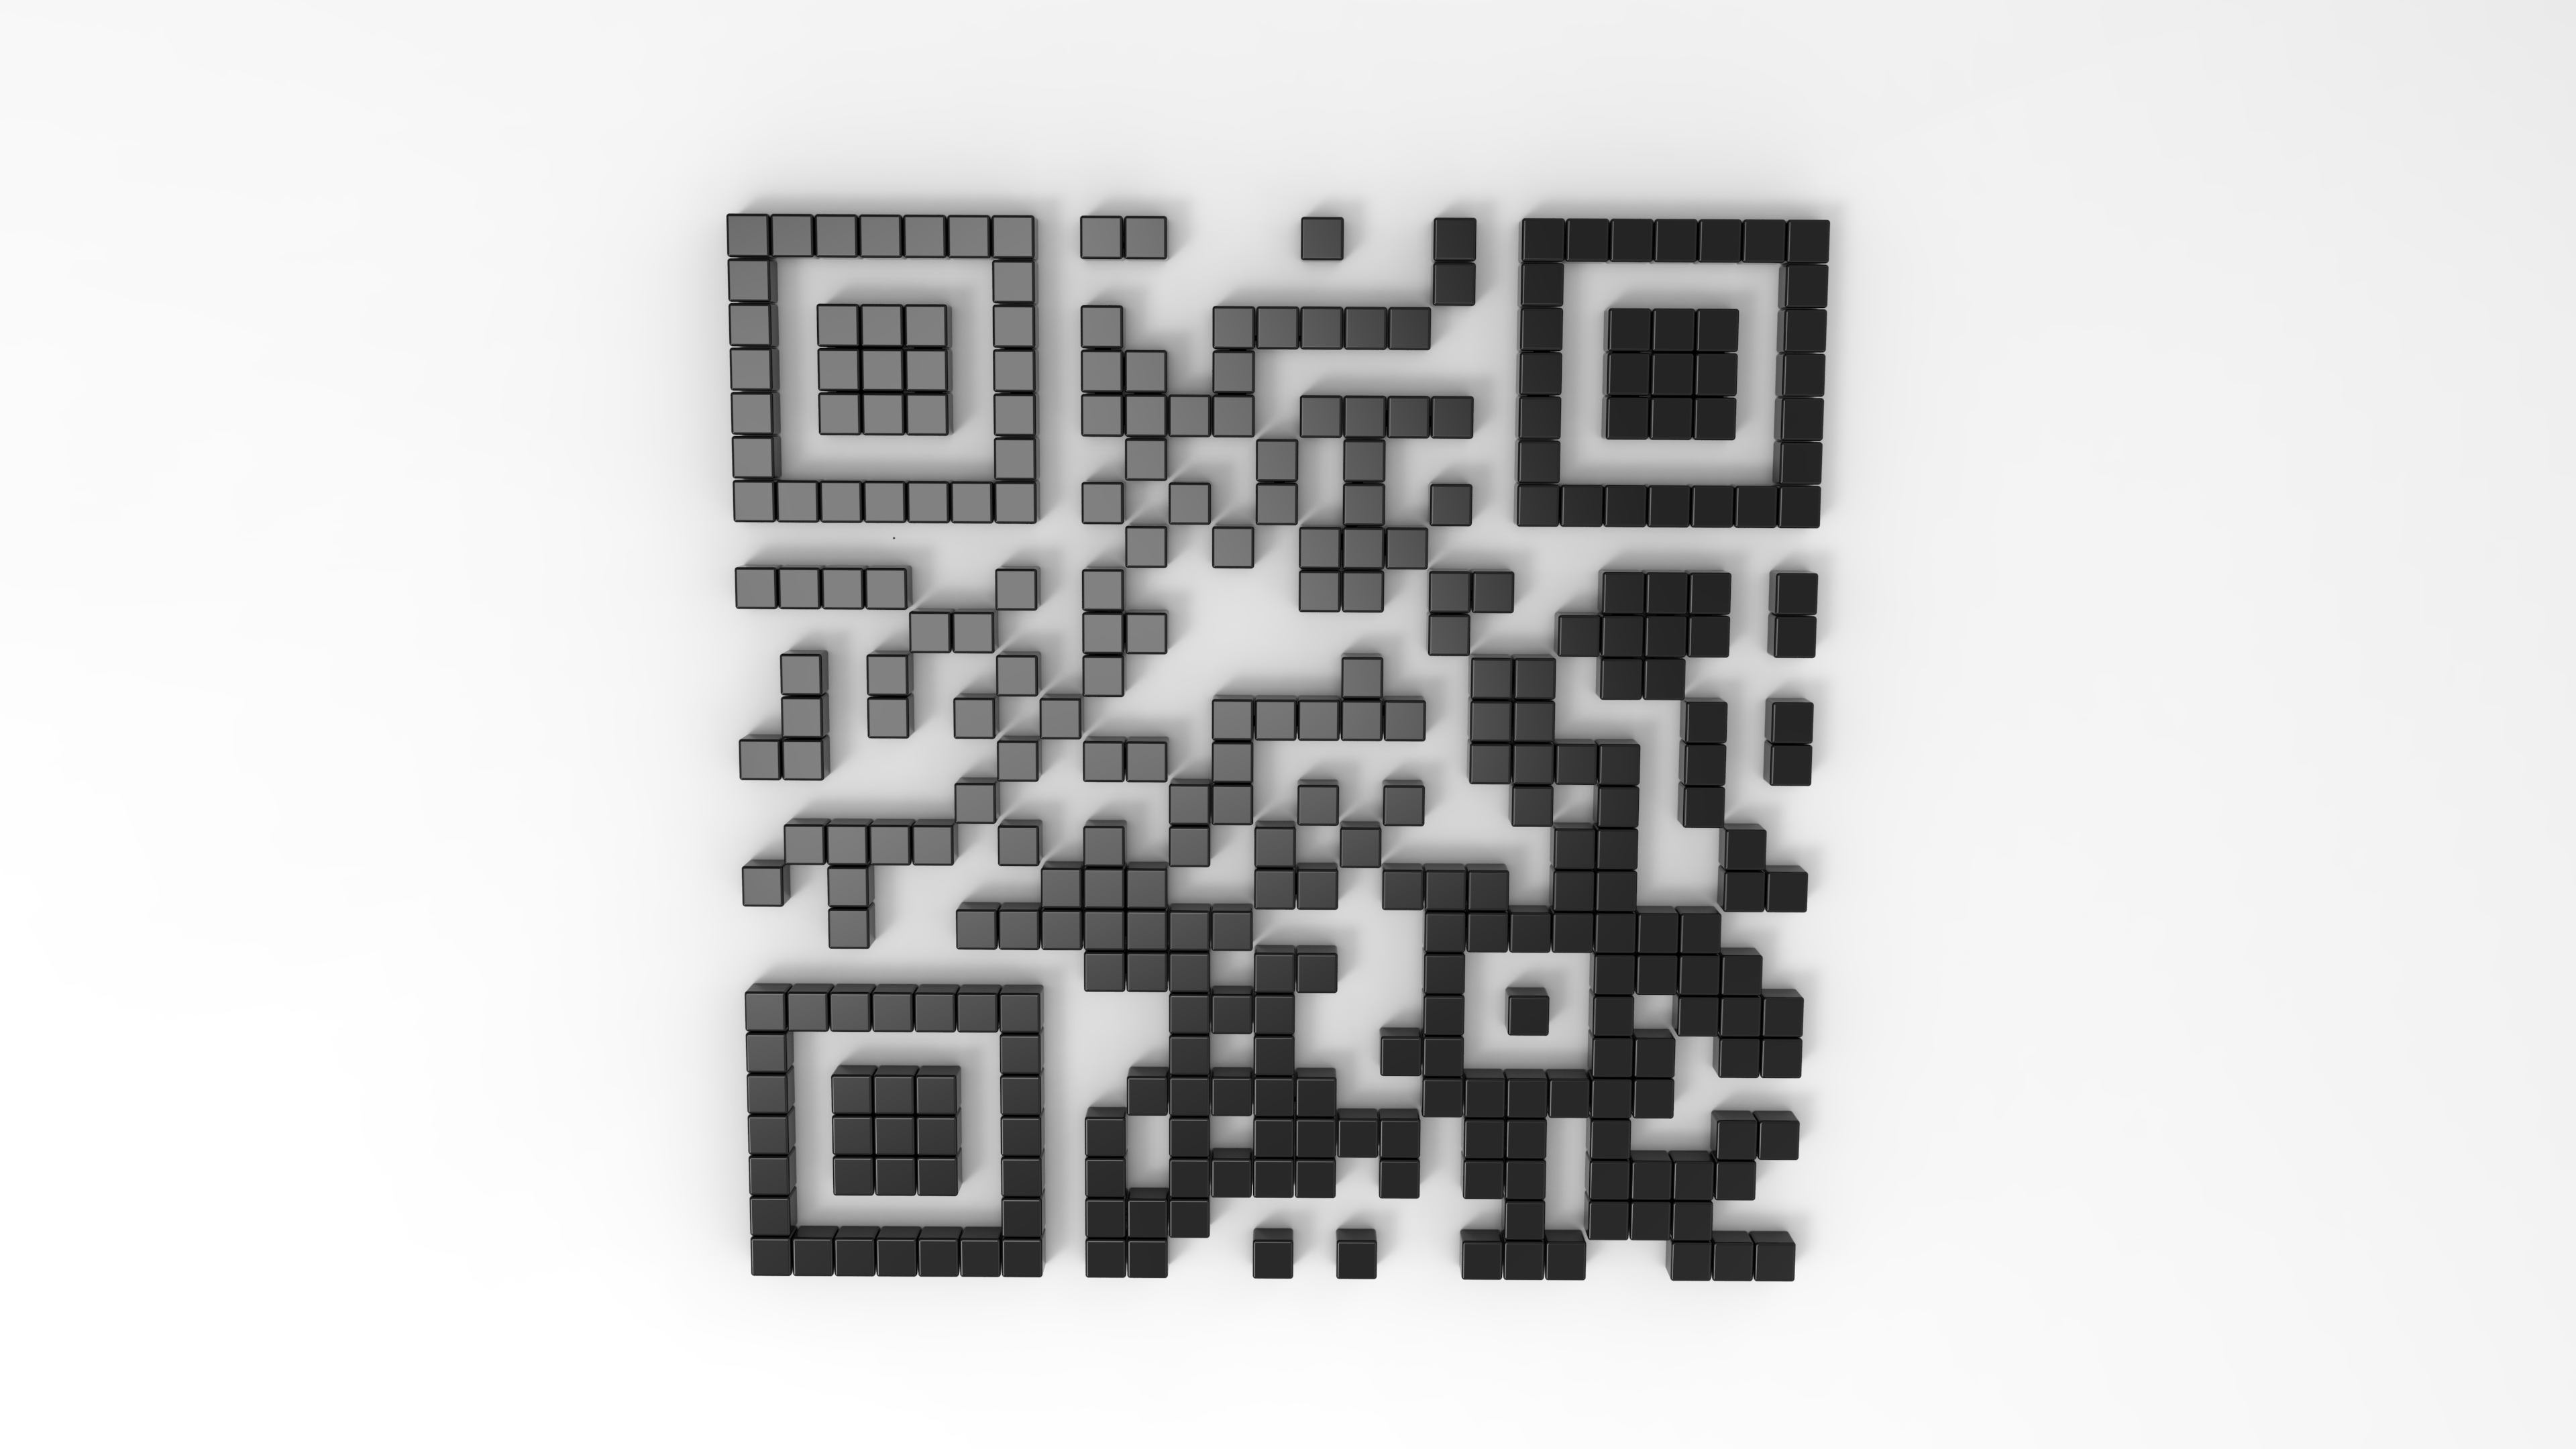 Qr код куб. 3д QR код. D&S люстра с19450/2+2 QR код. Распечатка QR кодов. Куб с QR кодом.